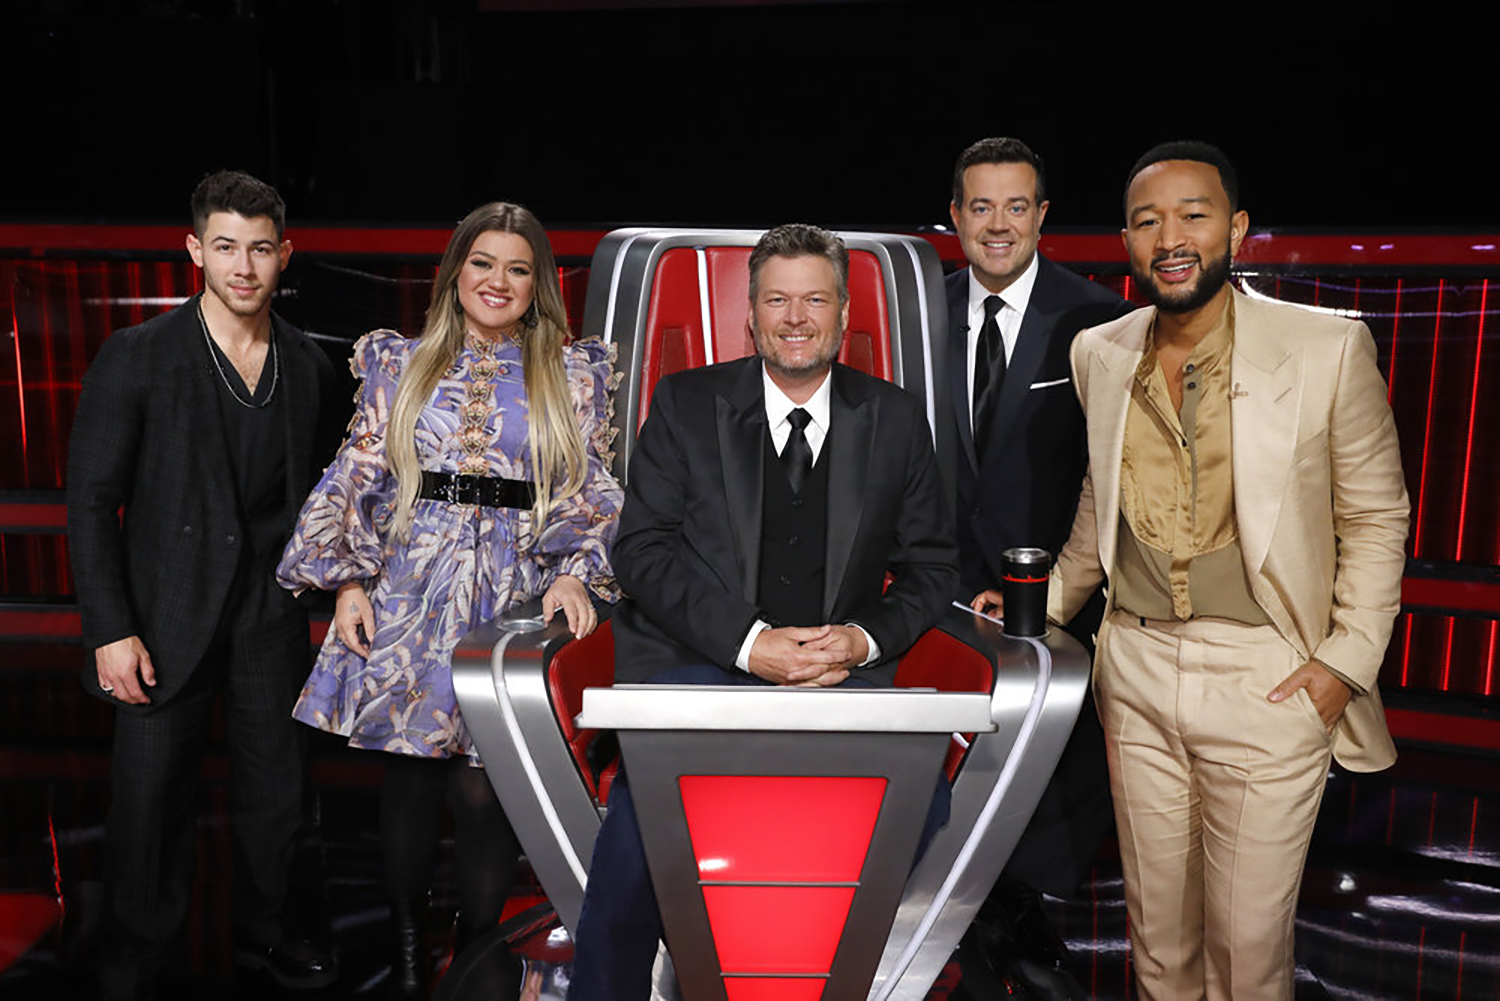 'The Voice' Season 20 live finale with Nick Jonas, Kelly Clarkson, Blake Shelton, Carson Daly, and John Legend